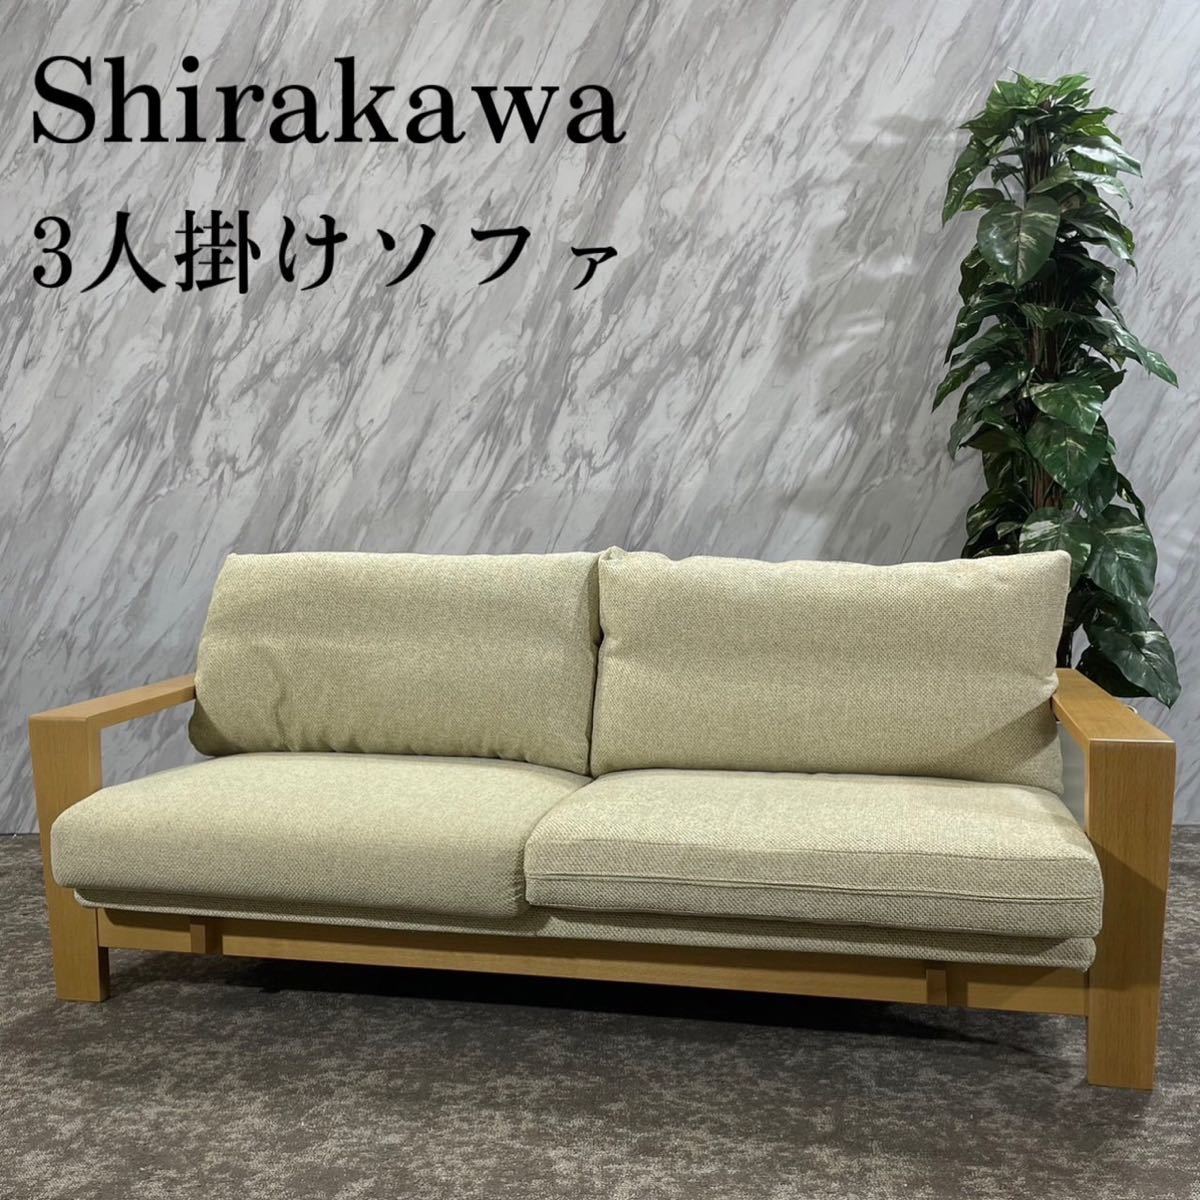 Shirakawa シラカワ 飛騨の家具 SL-R2483 3人掛け F260